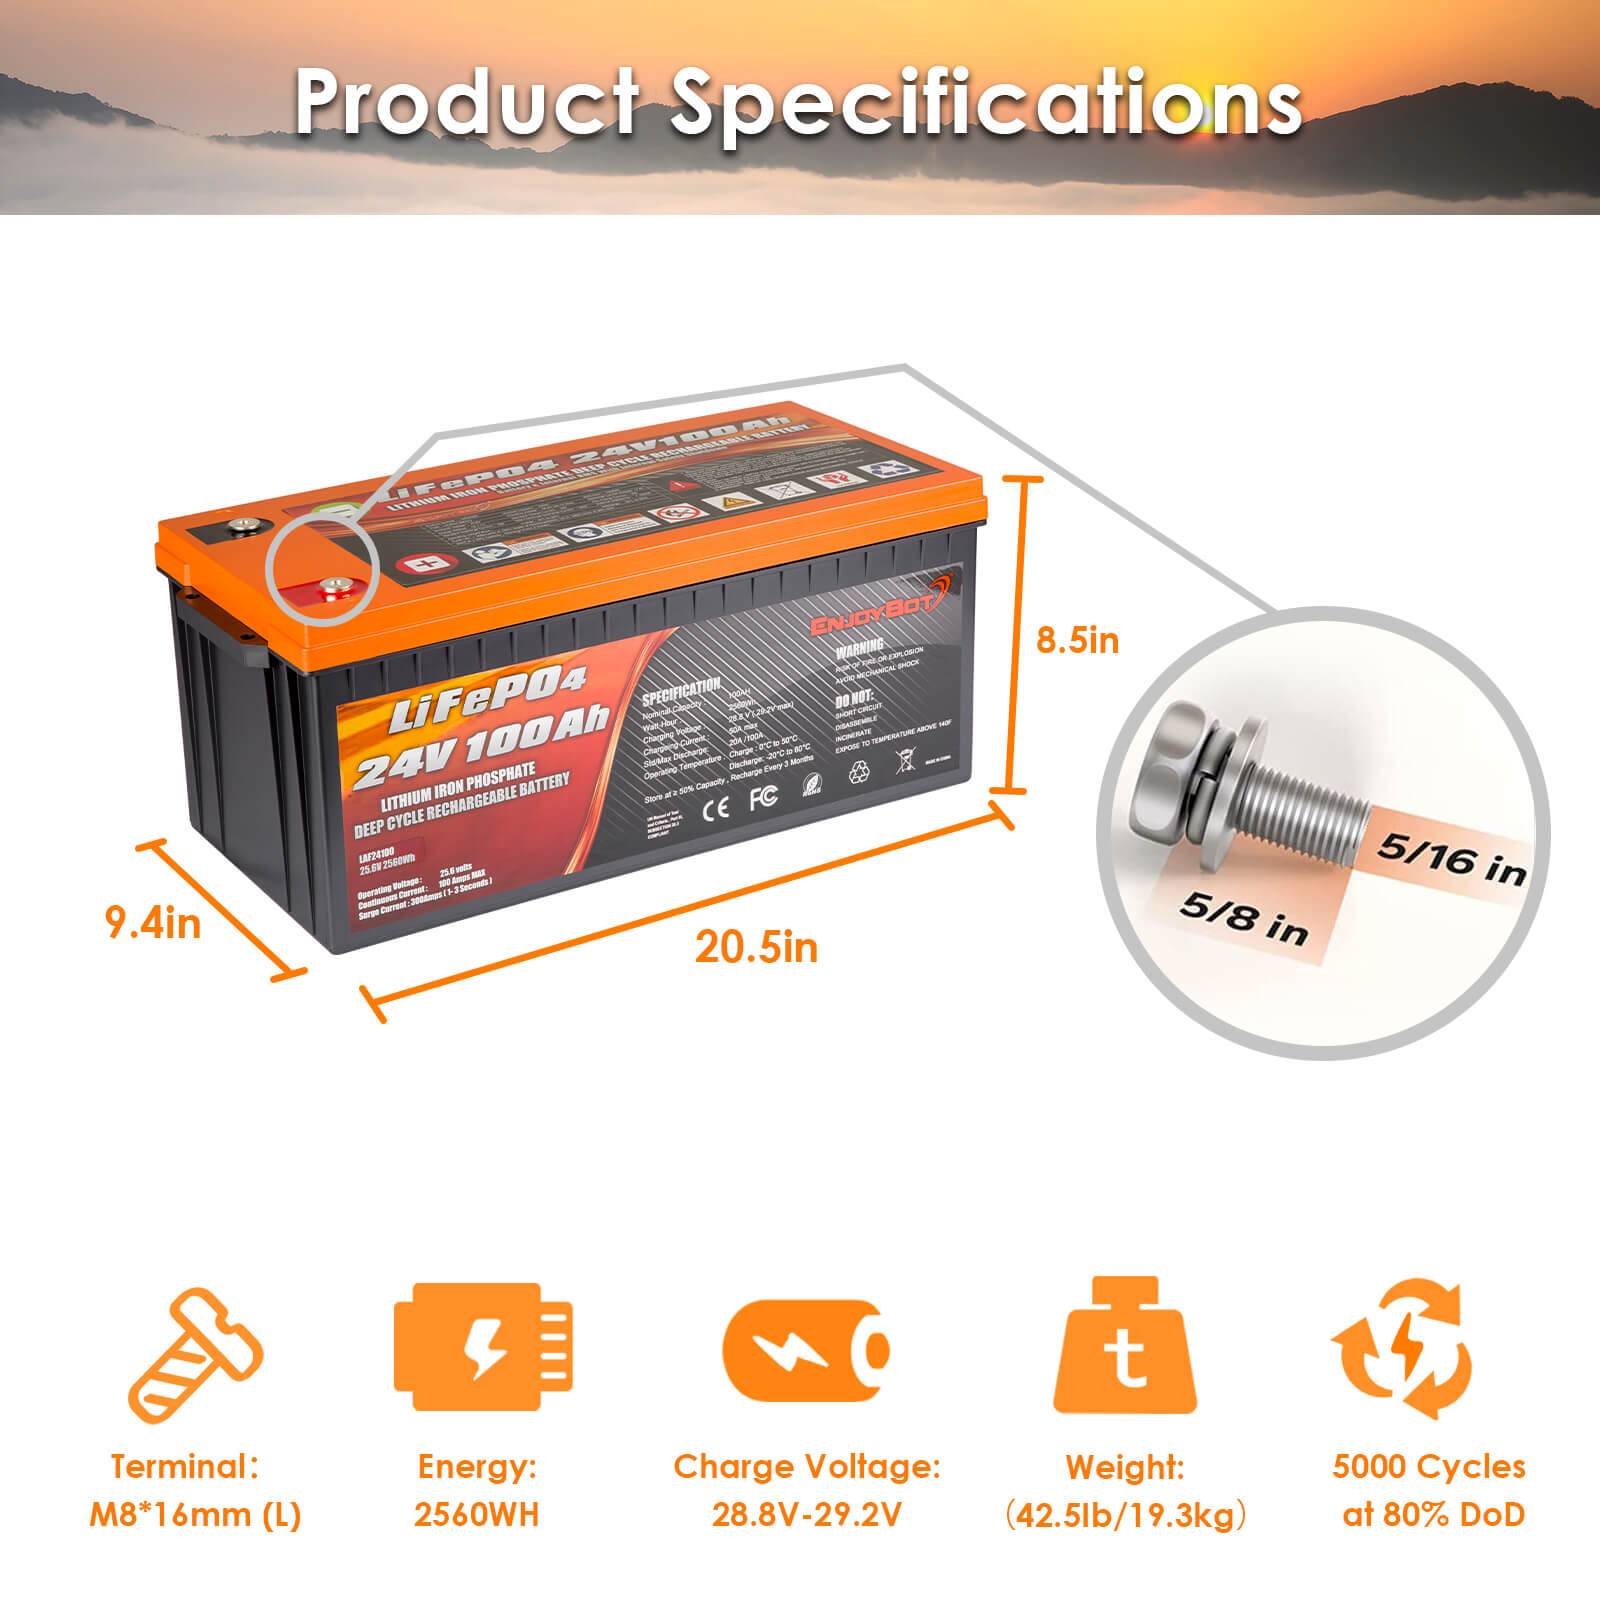 Enjoybot 24v 100ah LiFePO4 Battery - Product Specification